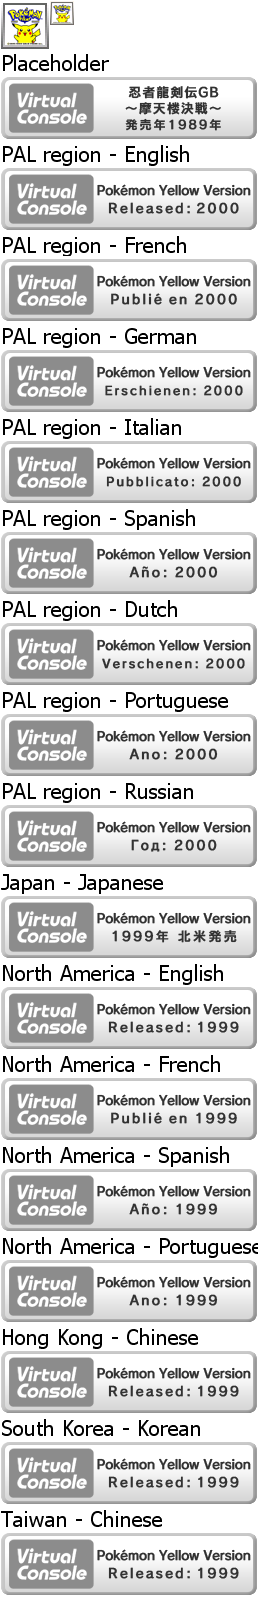 Virtual Console - Pokémon Yellow Version